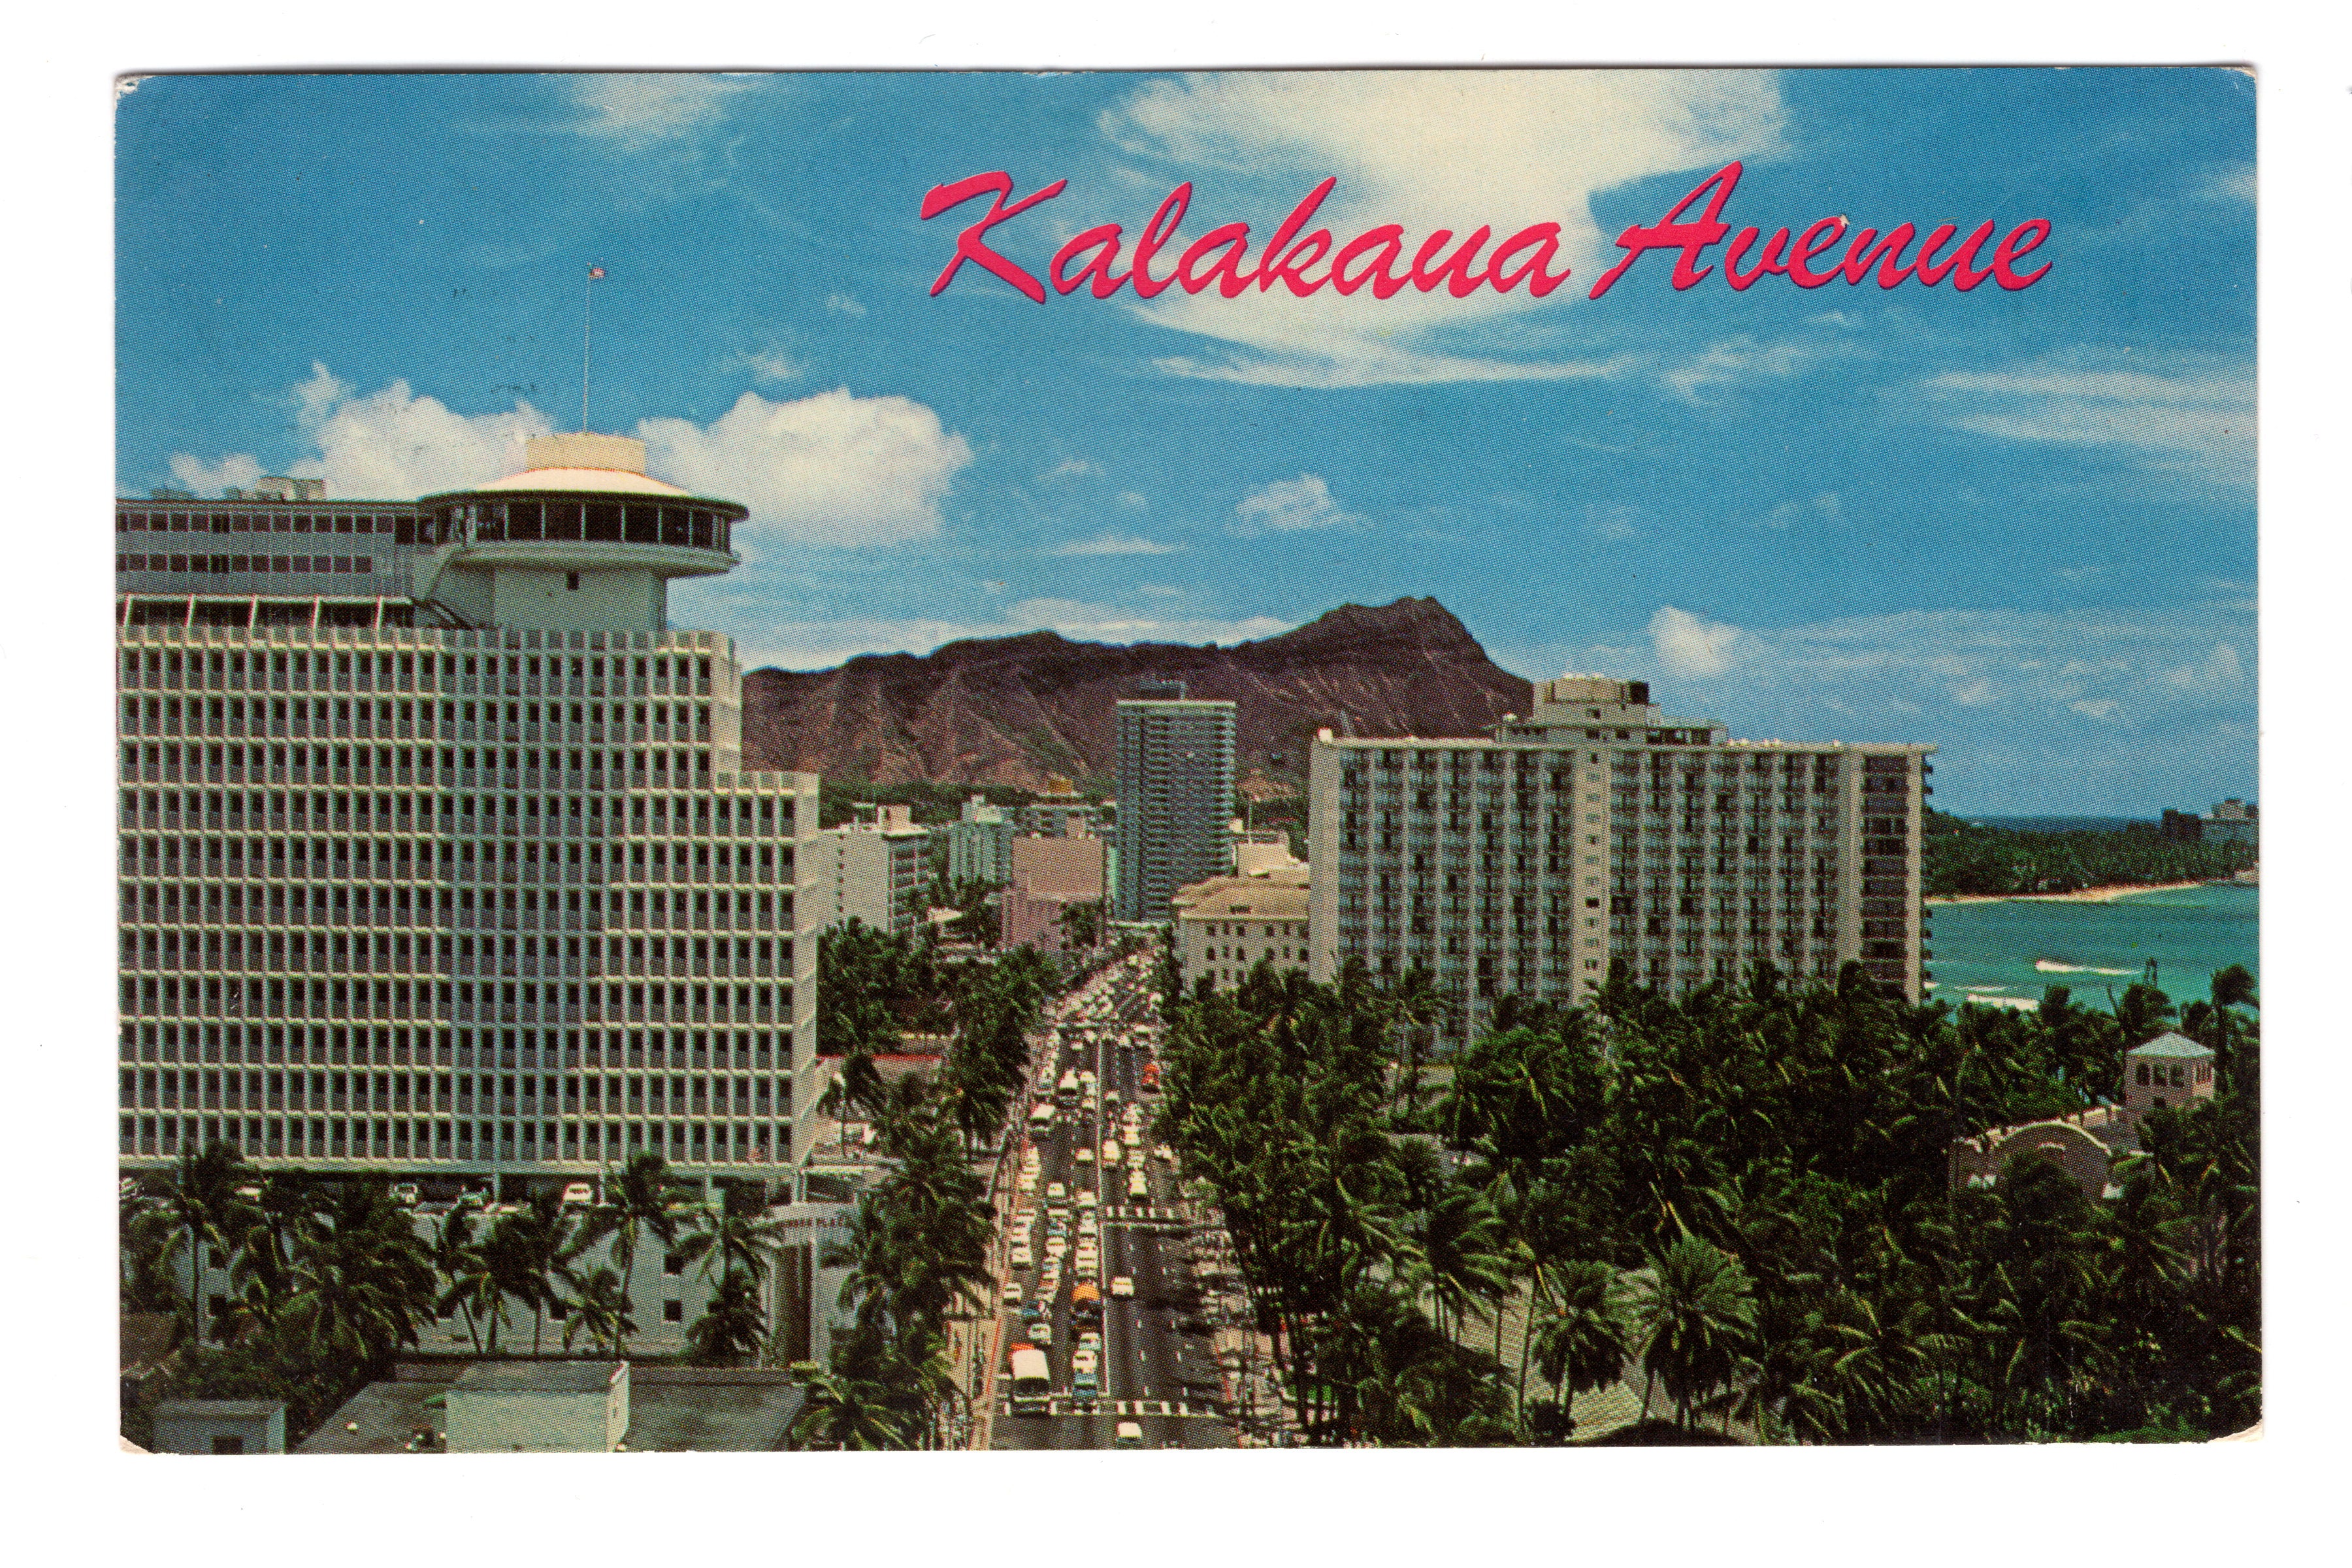 Kalakaua Avenue, Waikiki Main Street, Hawaii, Vintage Post Card